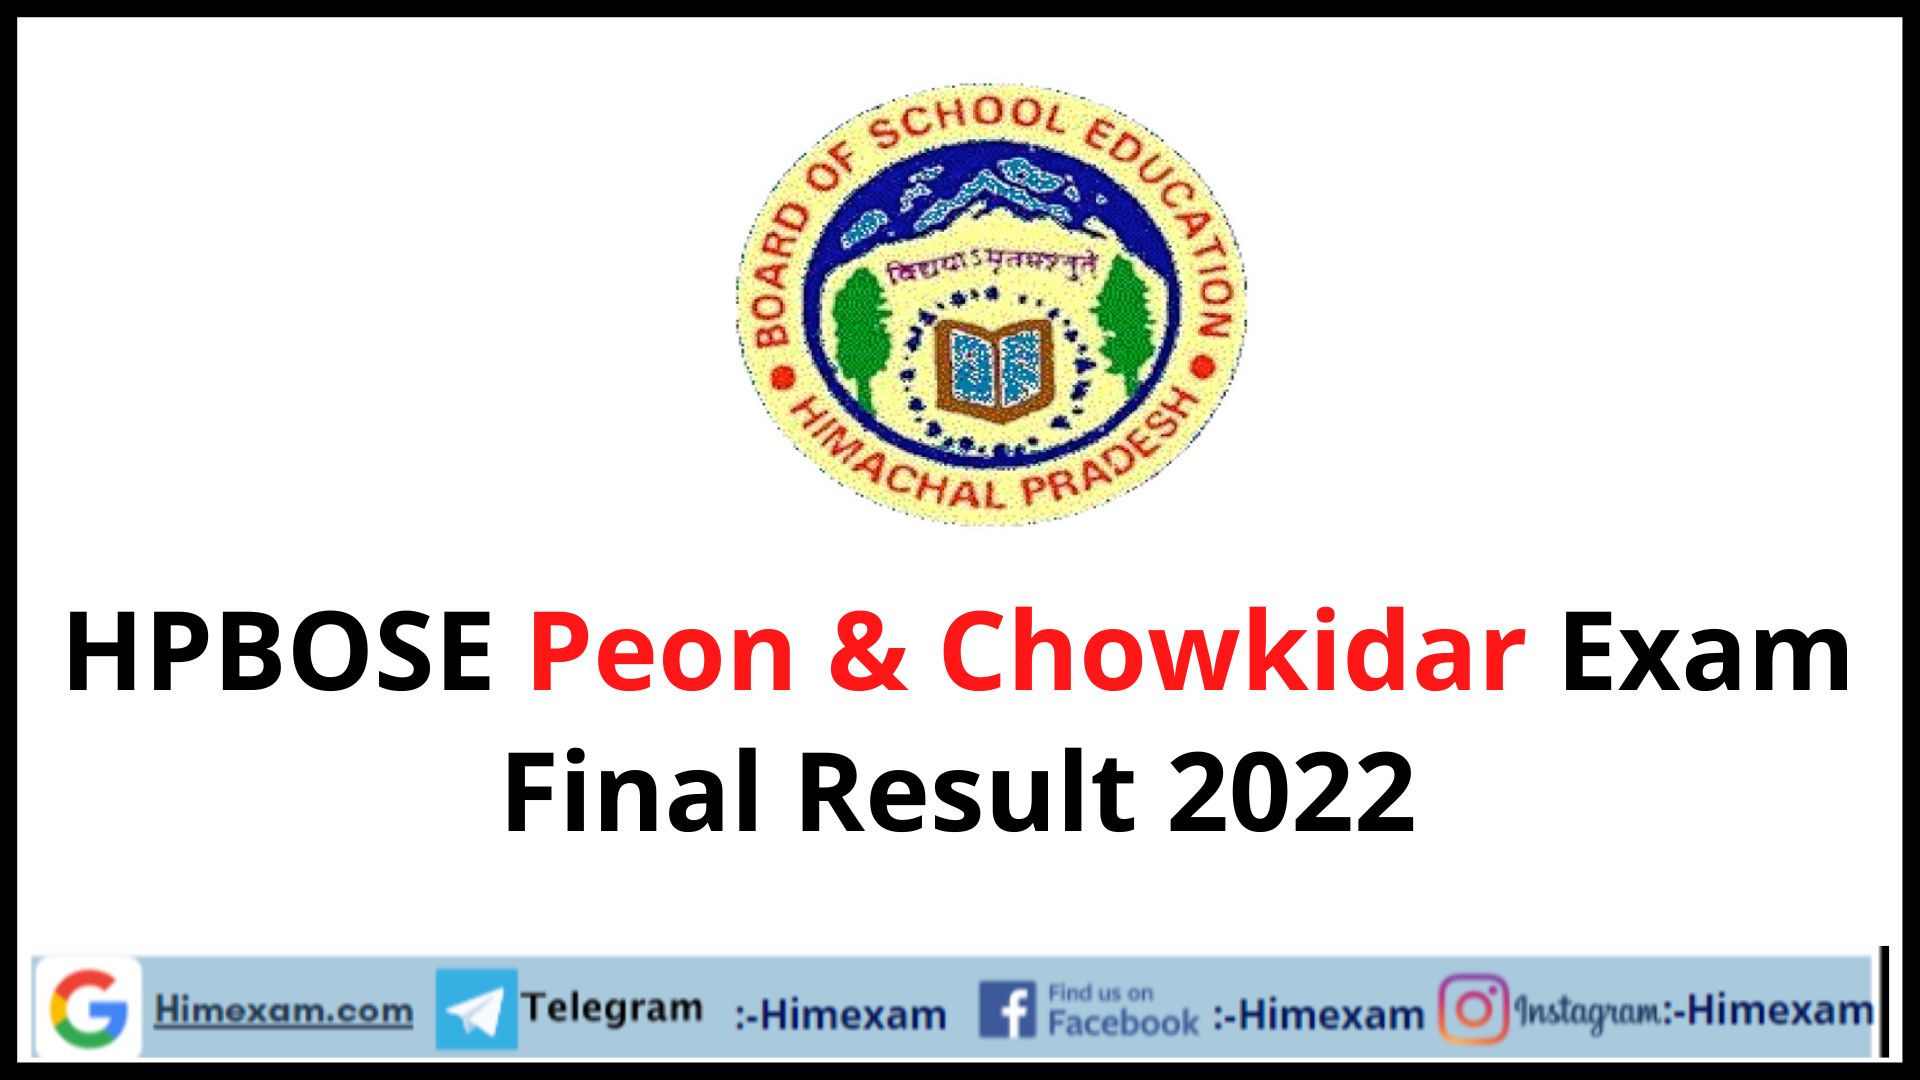 HPBOSE Peon & Chowkidar Exam Final Result 2022